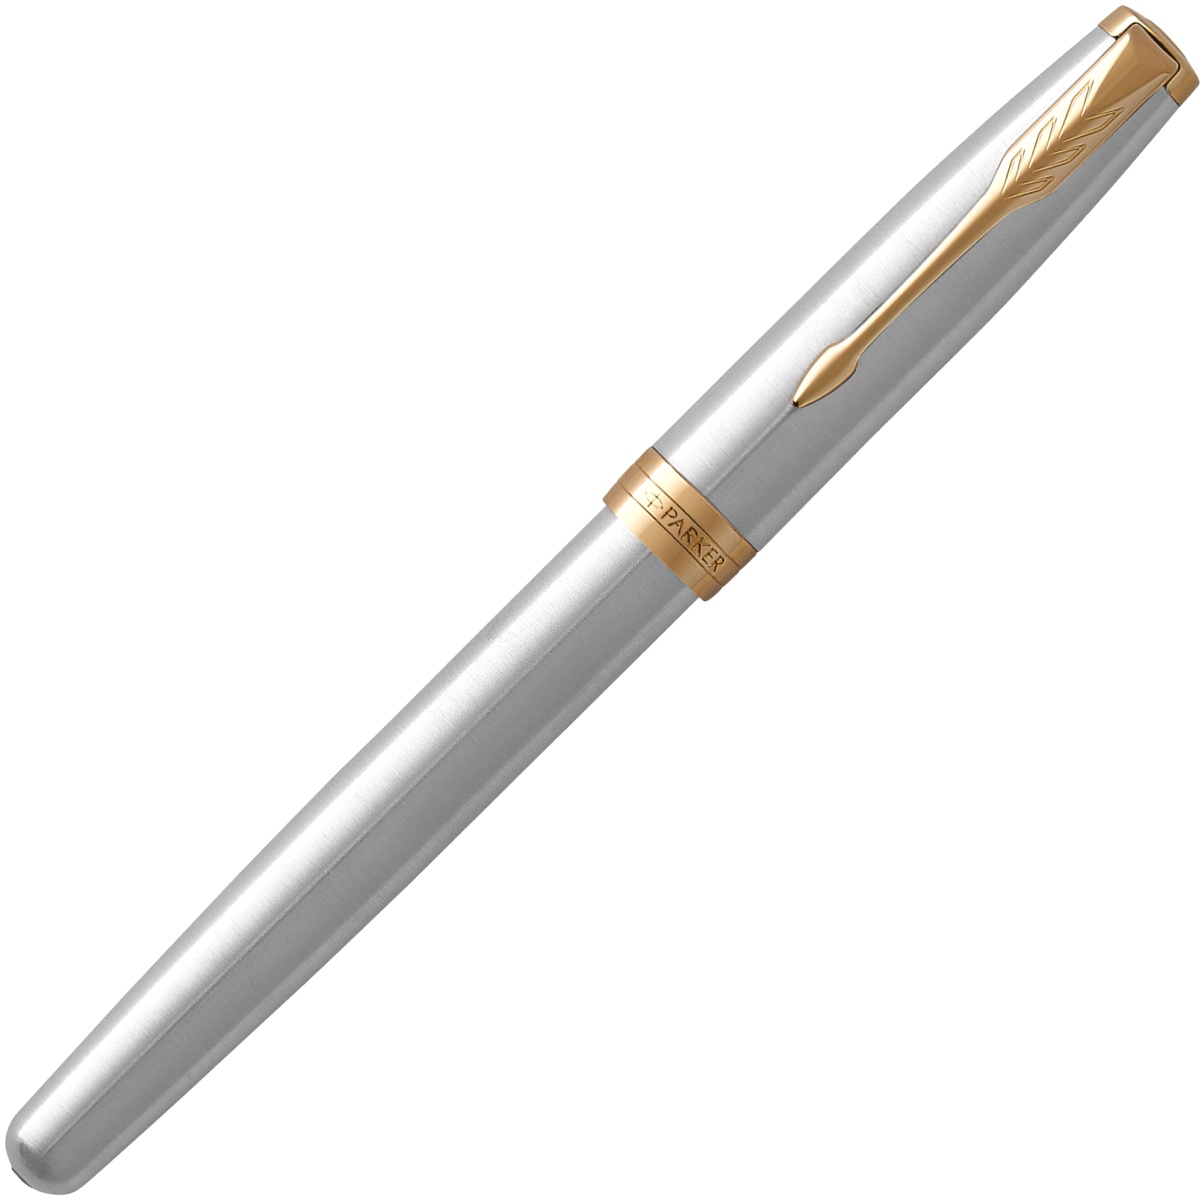  Перьевая ручка Parker Sonnet Core F527, Stainless Steel GT (Перо F), фото 2